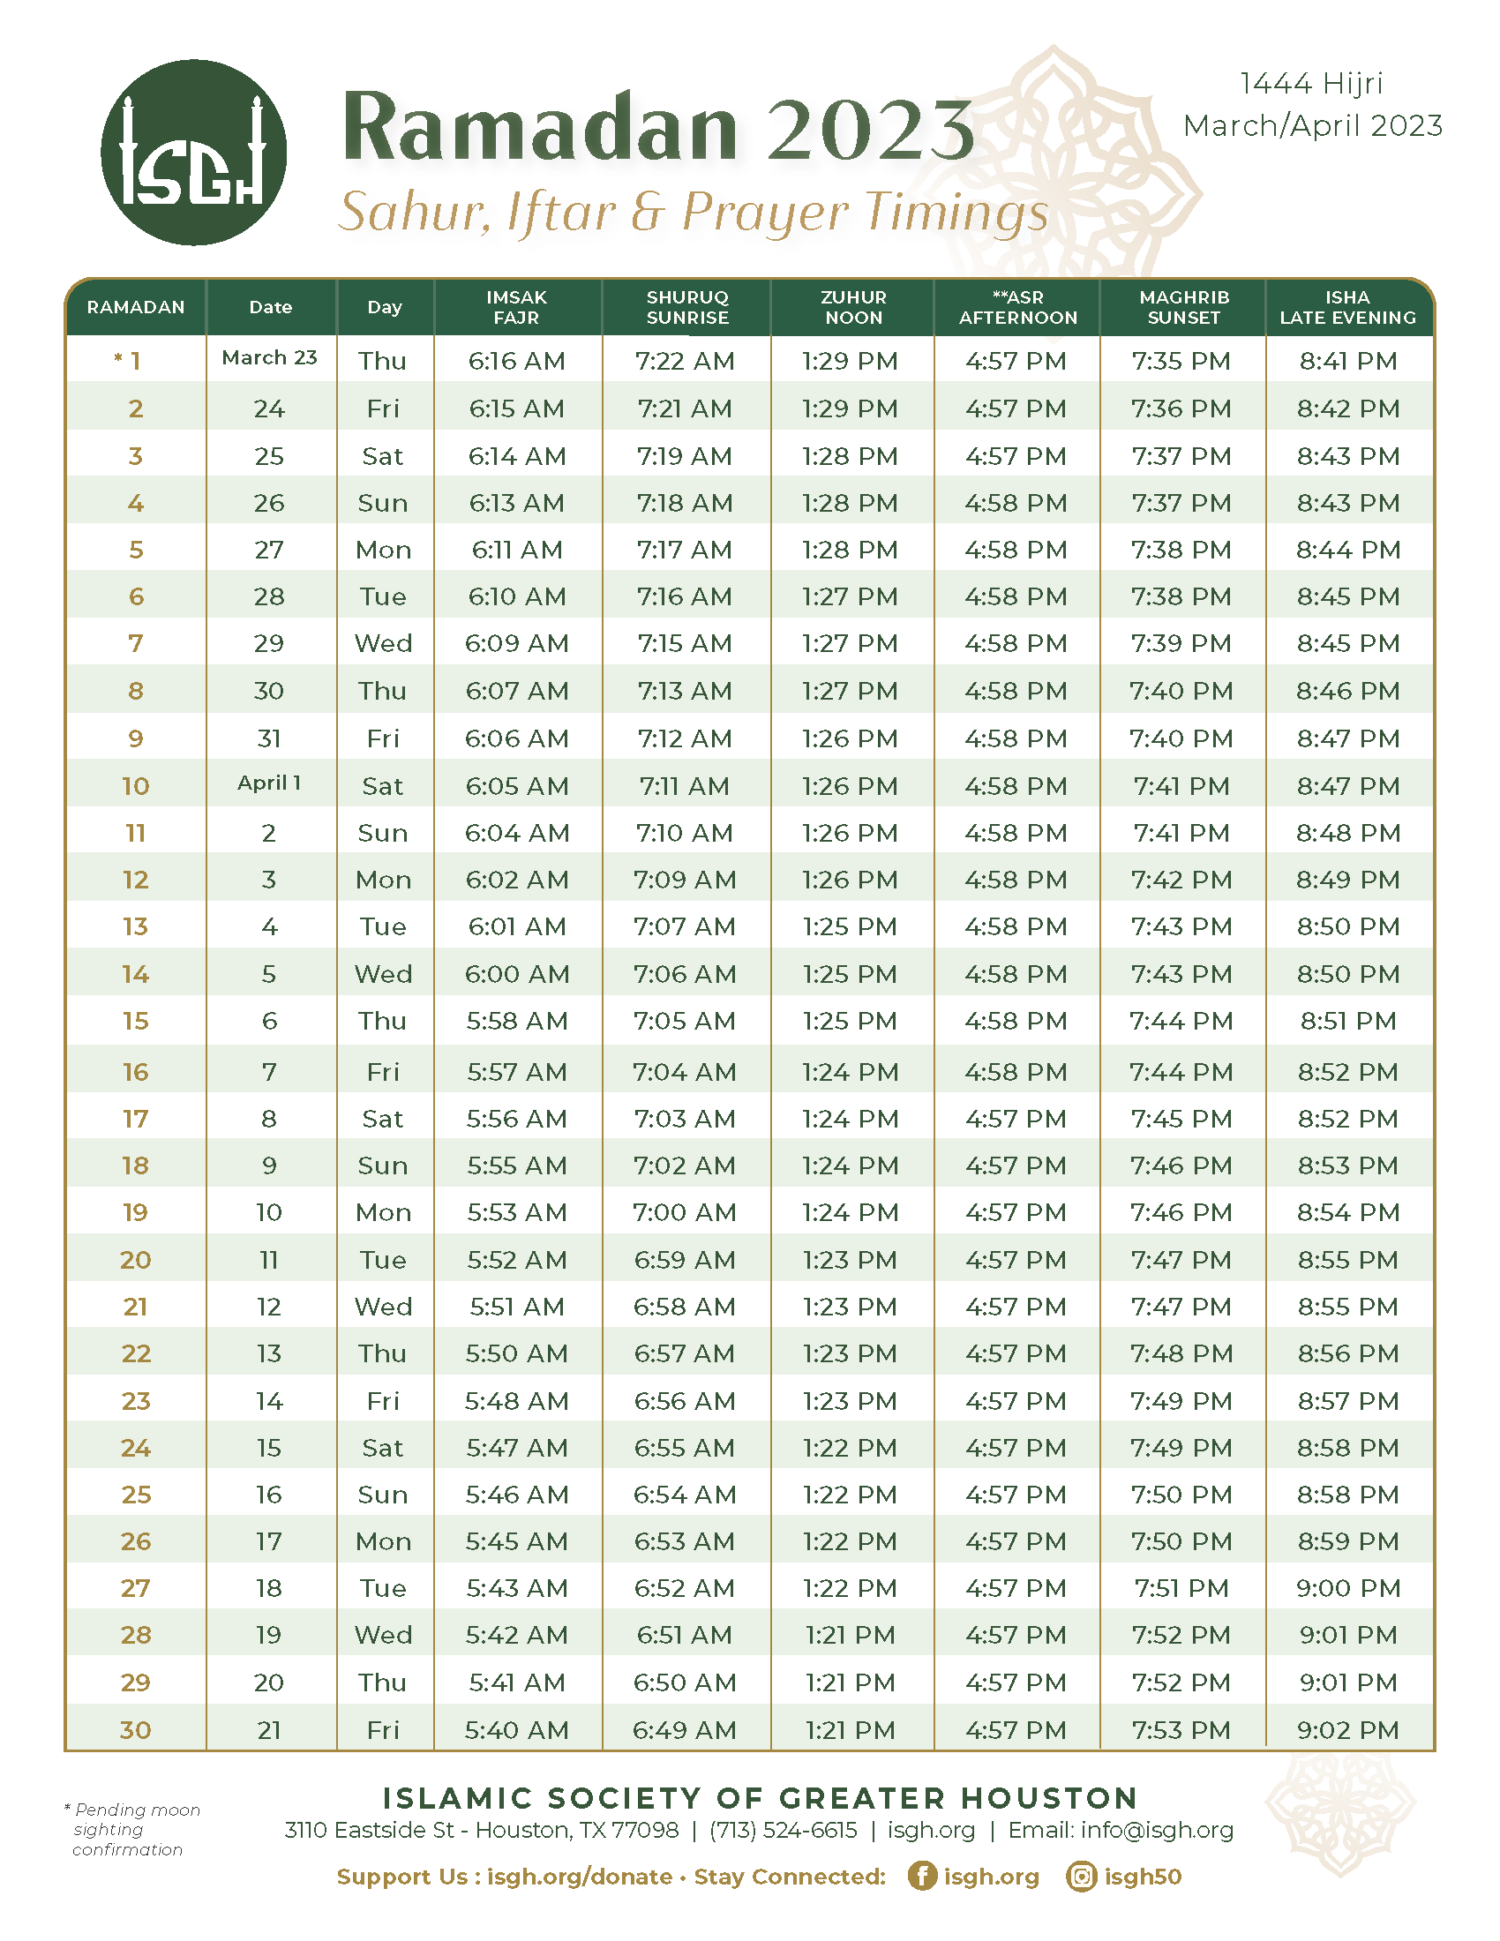 Ramadan Schedule 2023 Islamic Society Greater Houston